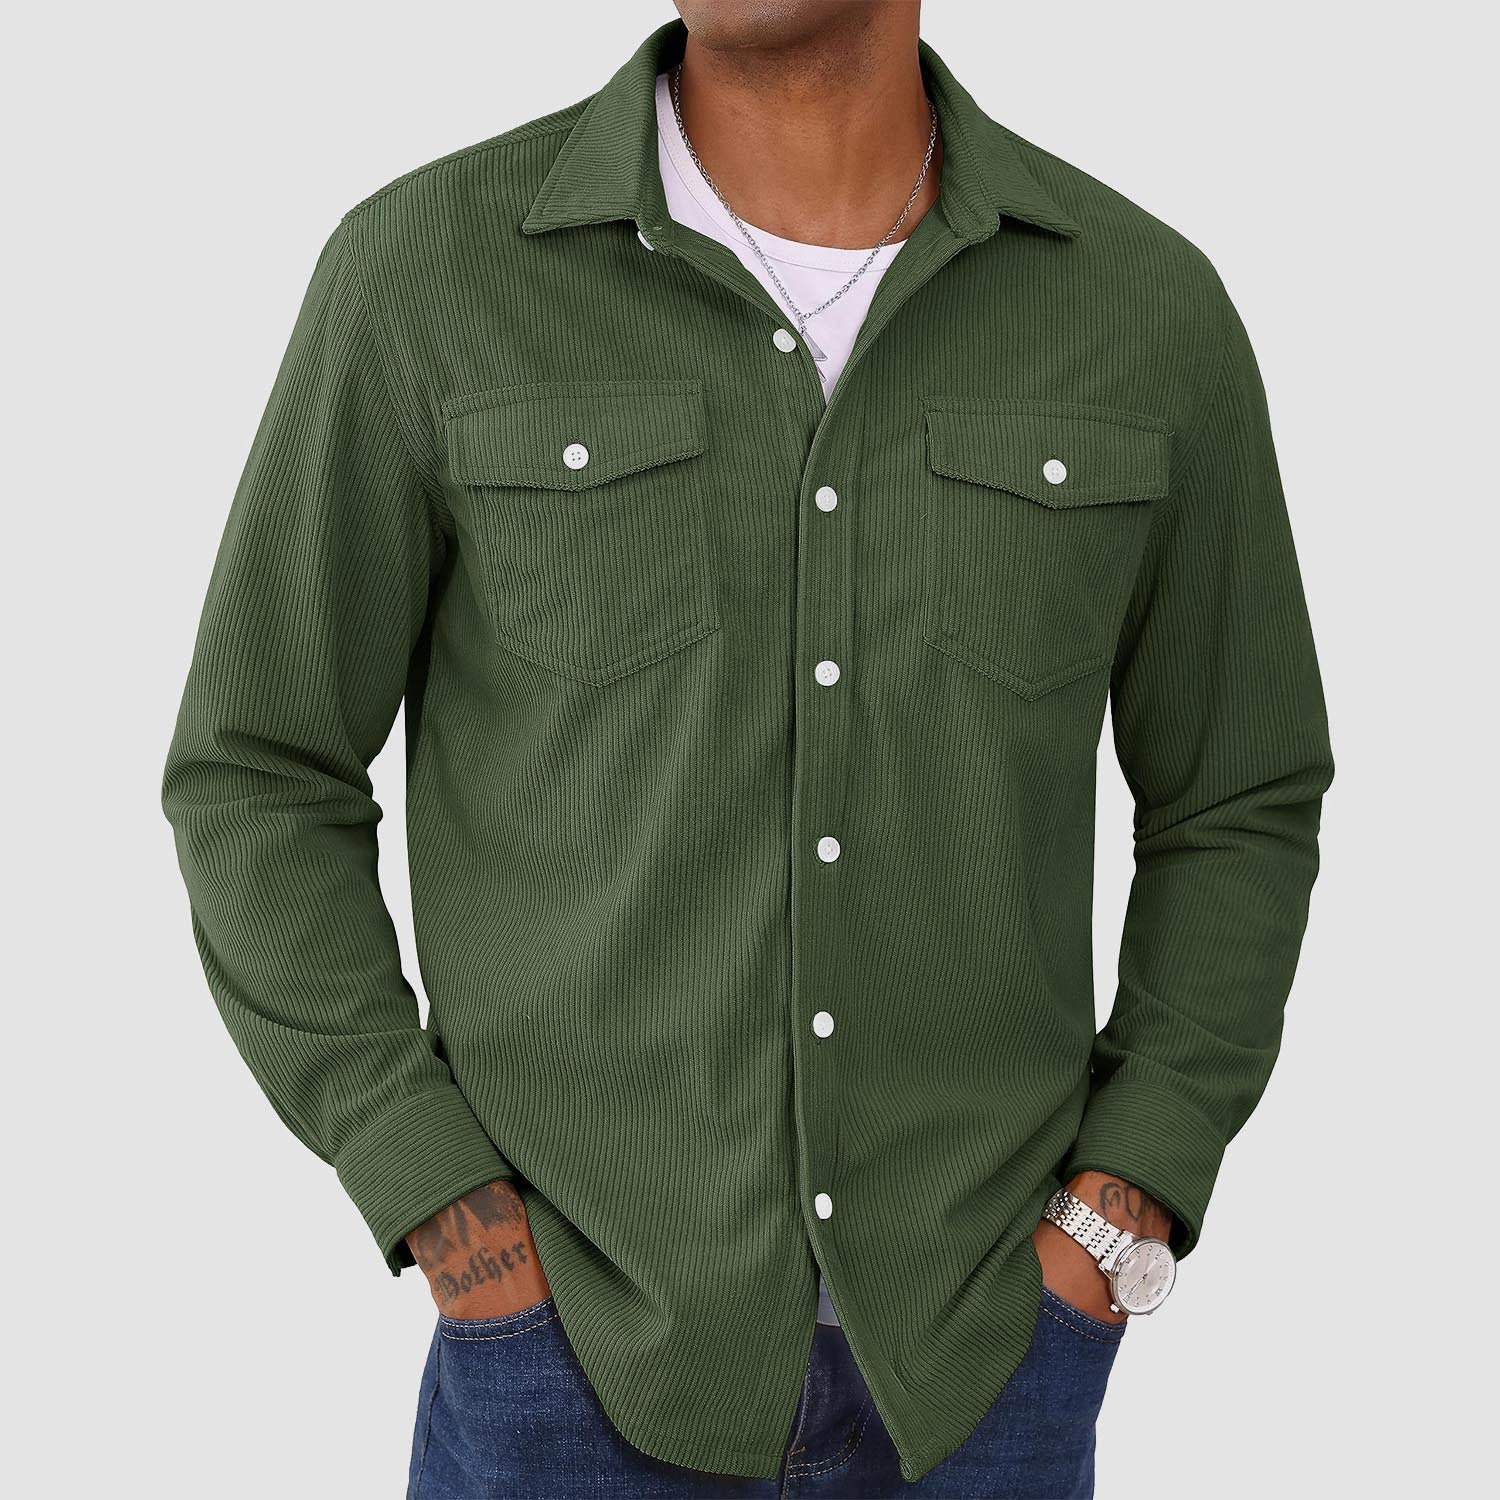 Men's Long Sleeve Shirts, Smart & Casual Shirts